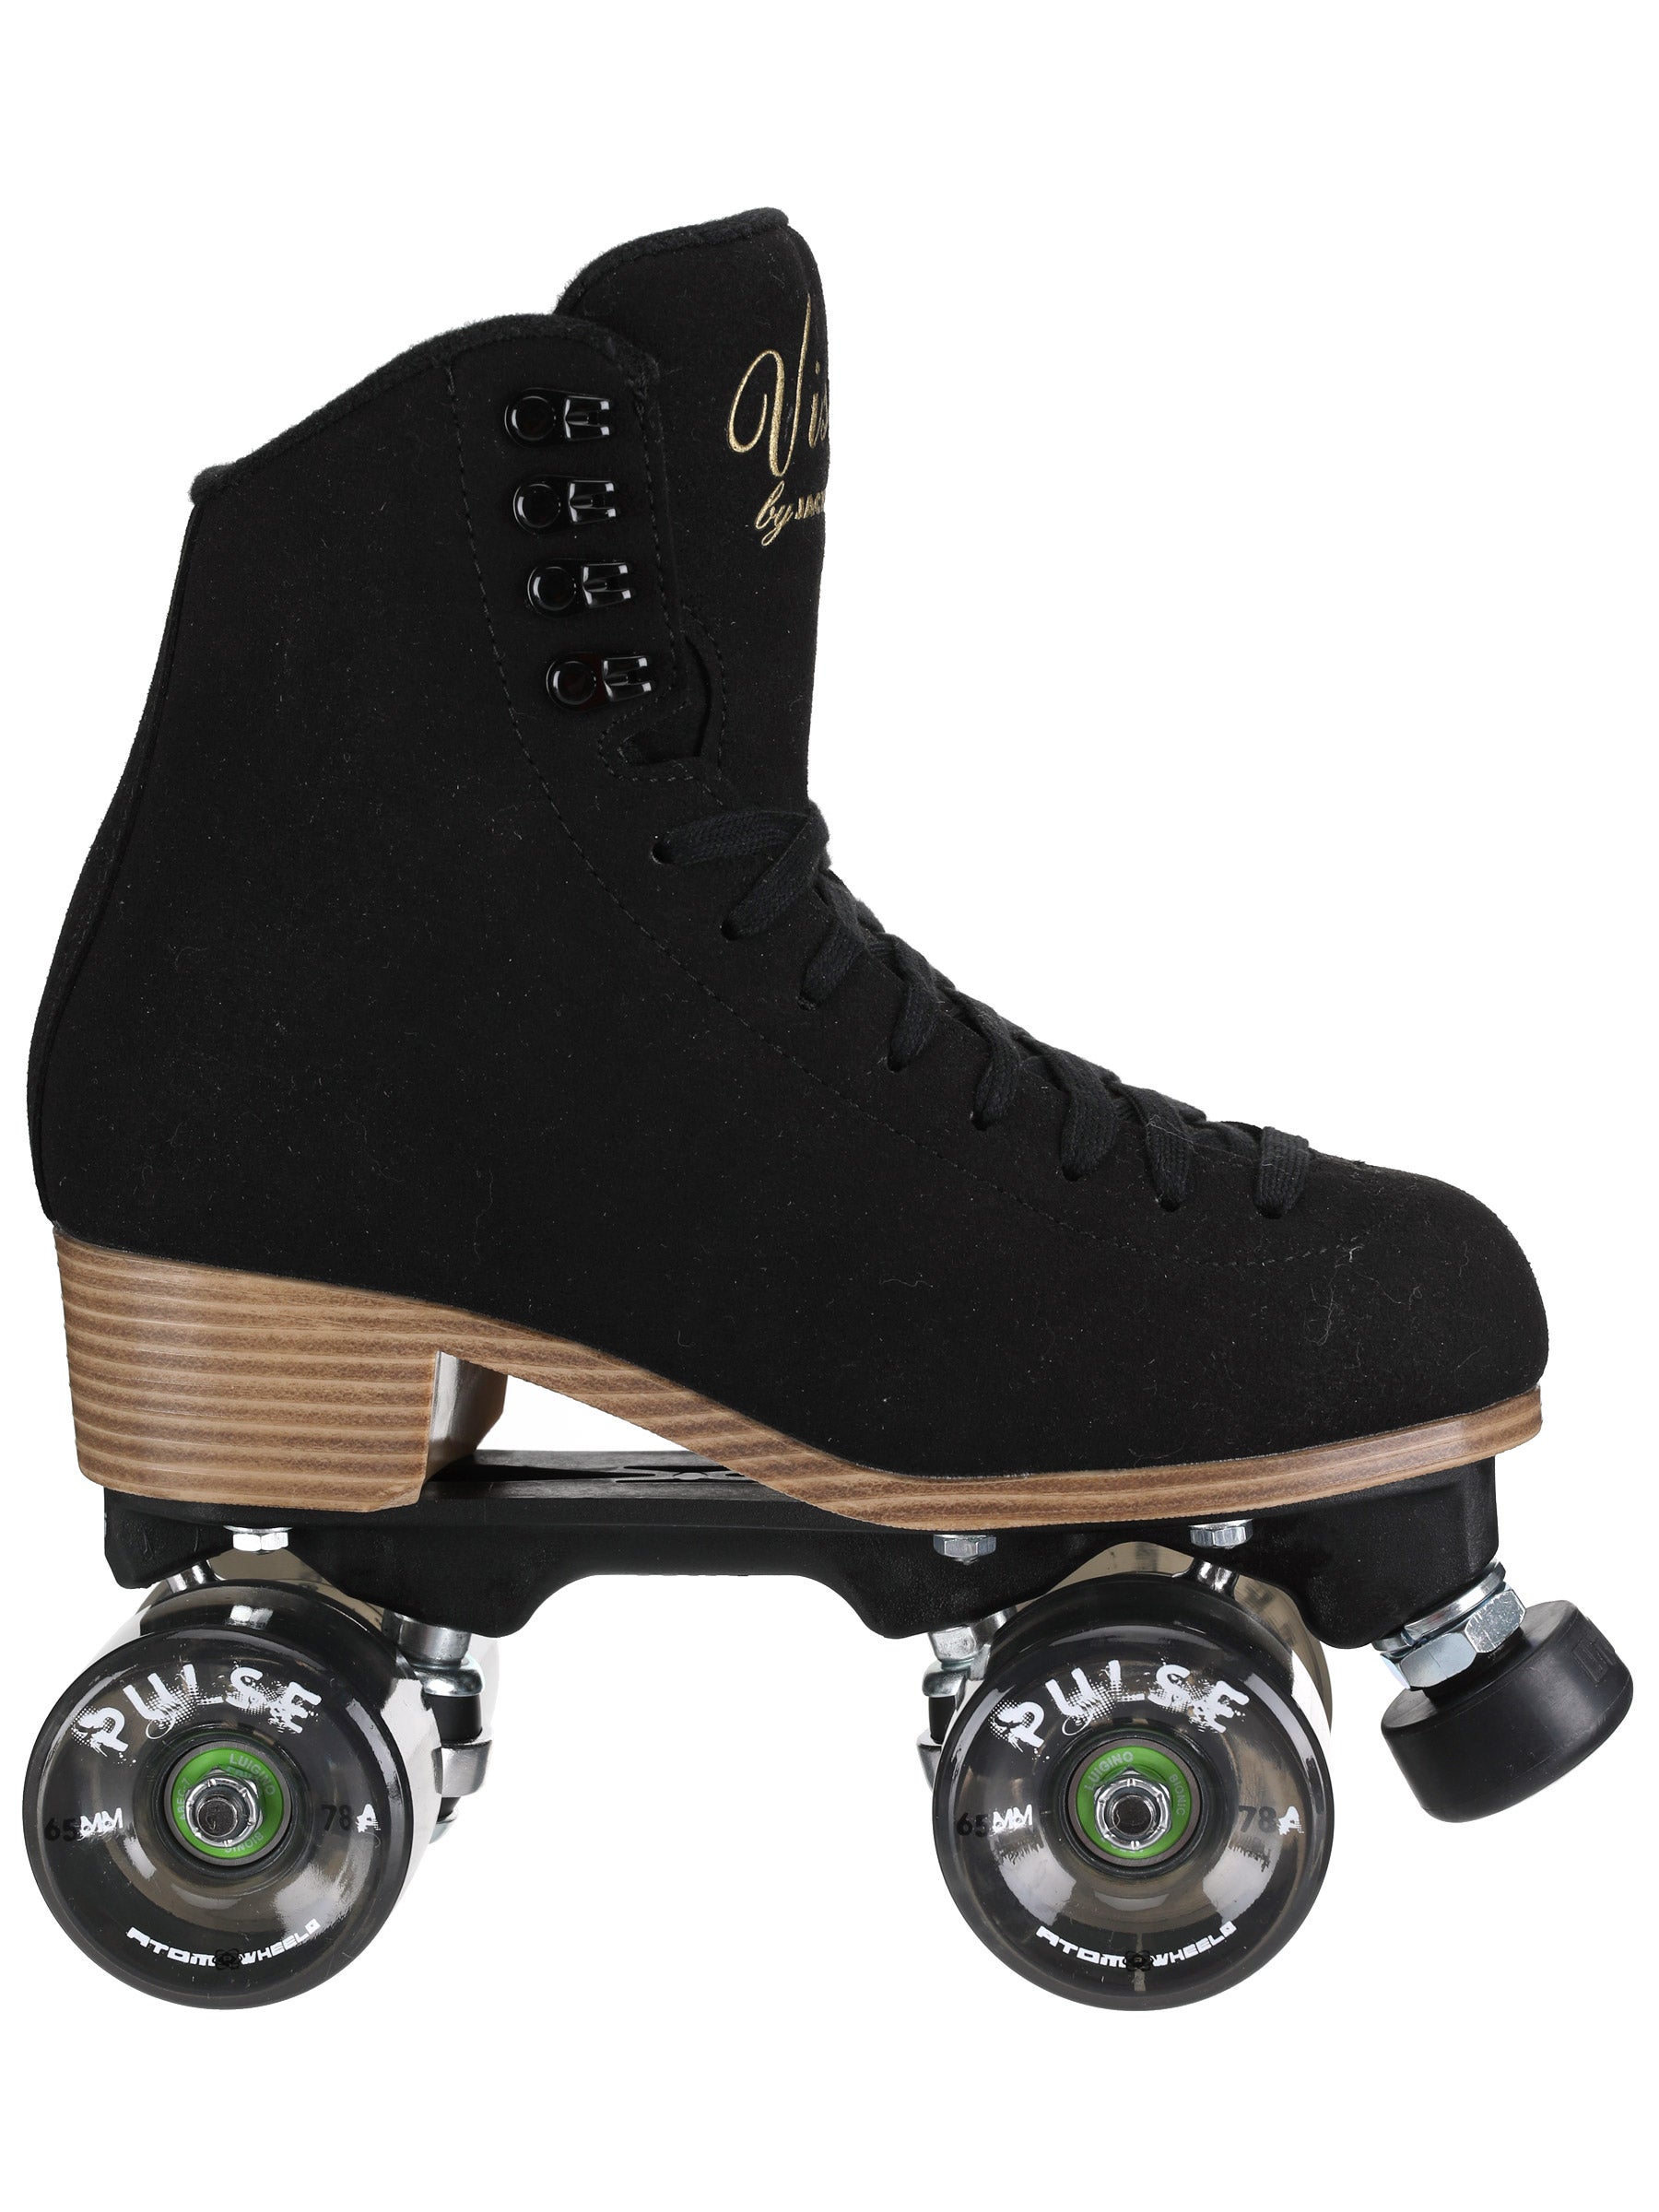 Details about   Jackson High Top Vista Viper Black Suede-Like Women's Size 7 Roller  Skates New 